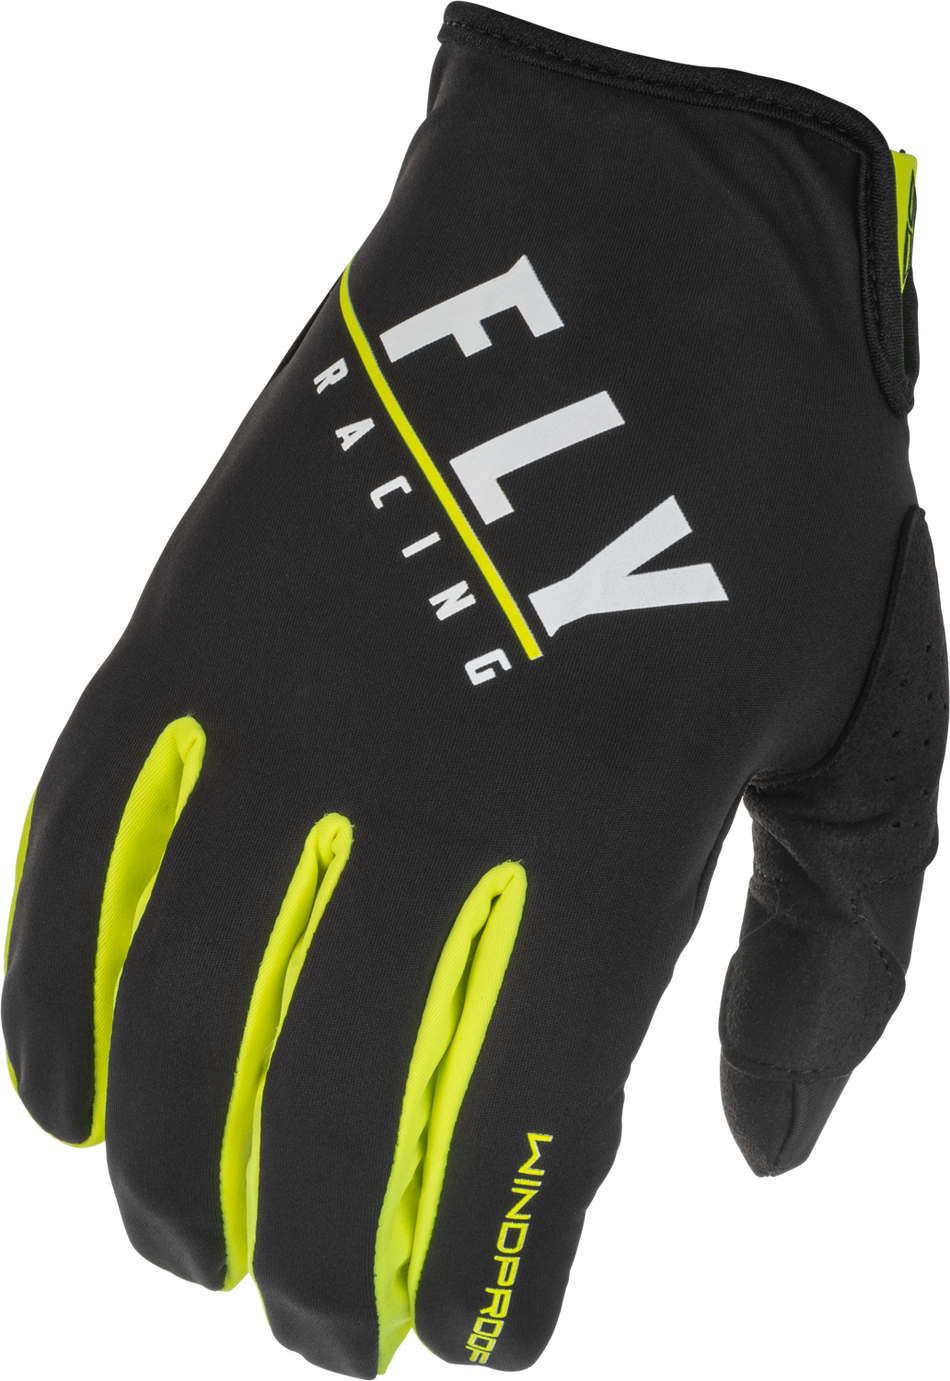 FLY RACING Windproof Gloves Black/Hi-Vis Sz 08 371-14208